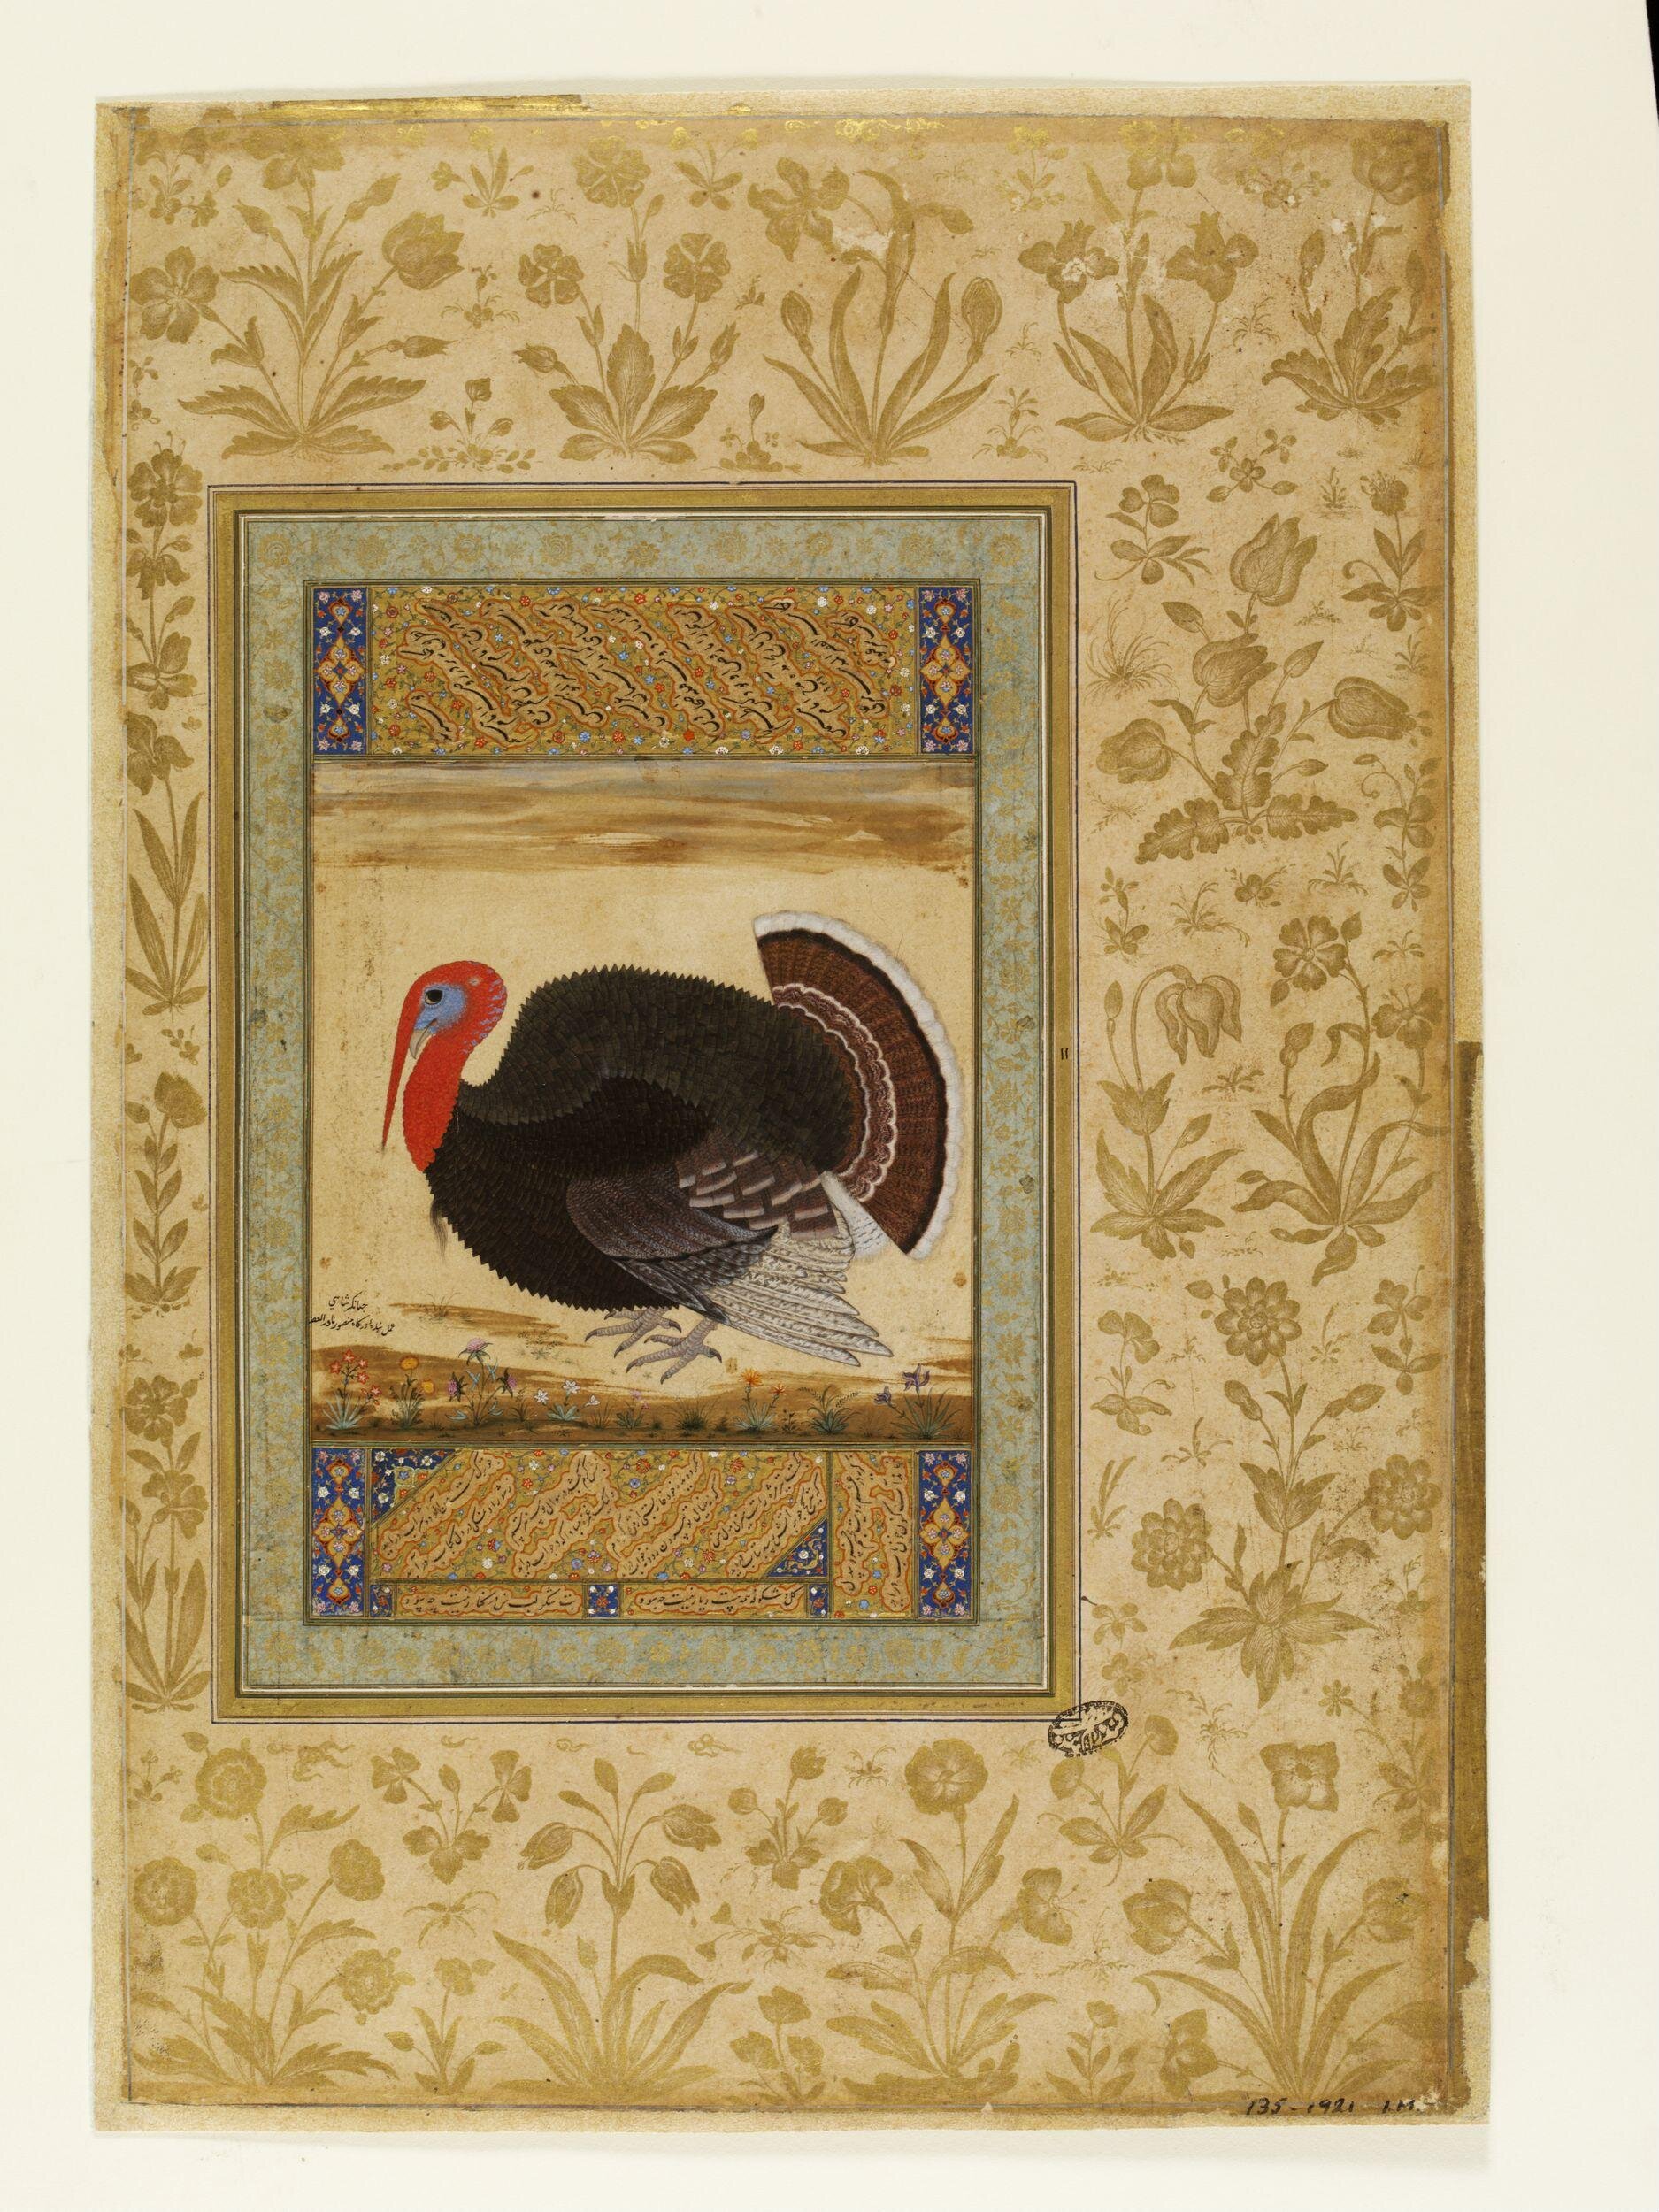 Turkey by Ustad Mansur - c. 1612 - 12.8 x 12.2 cm Victoria and Albert Museum